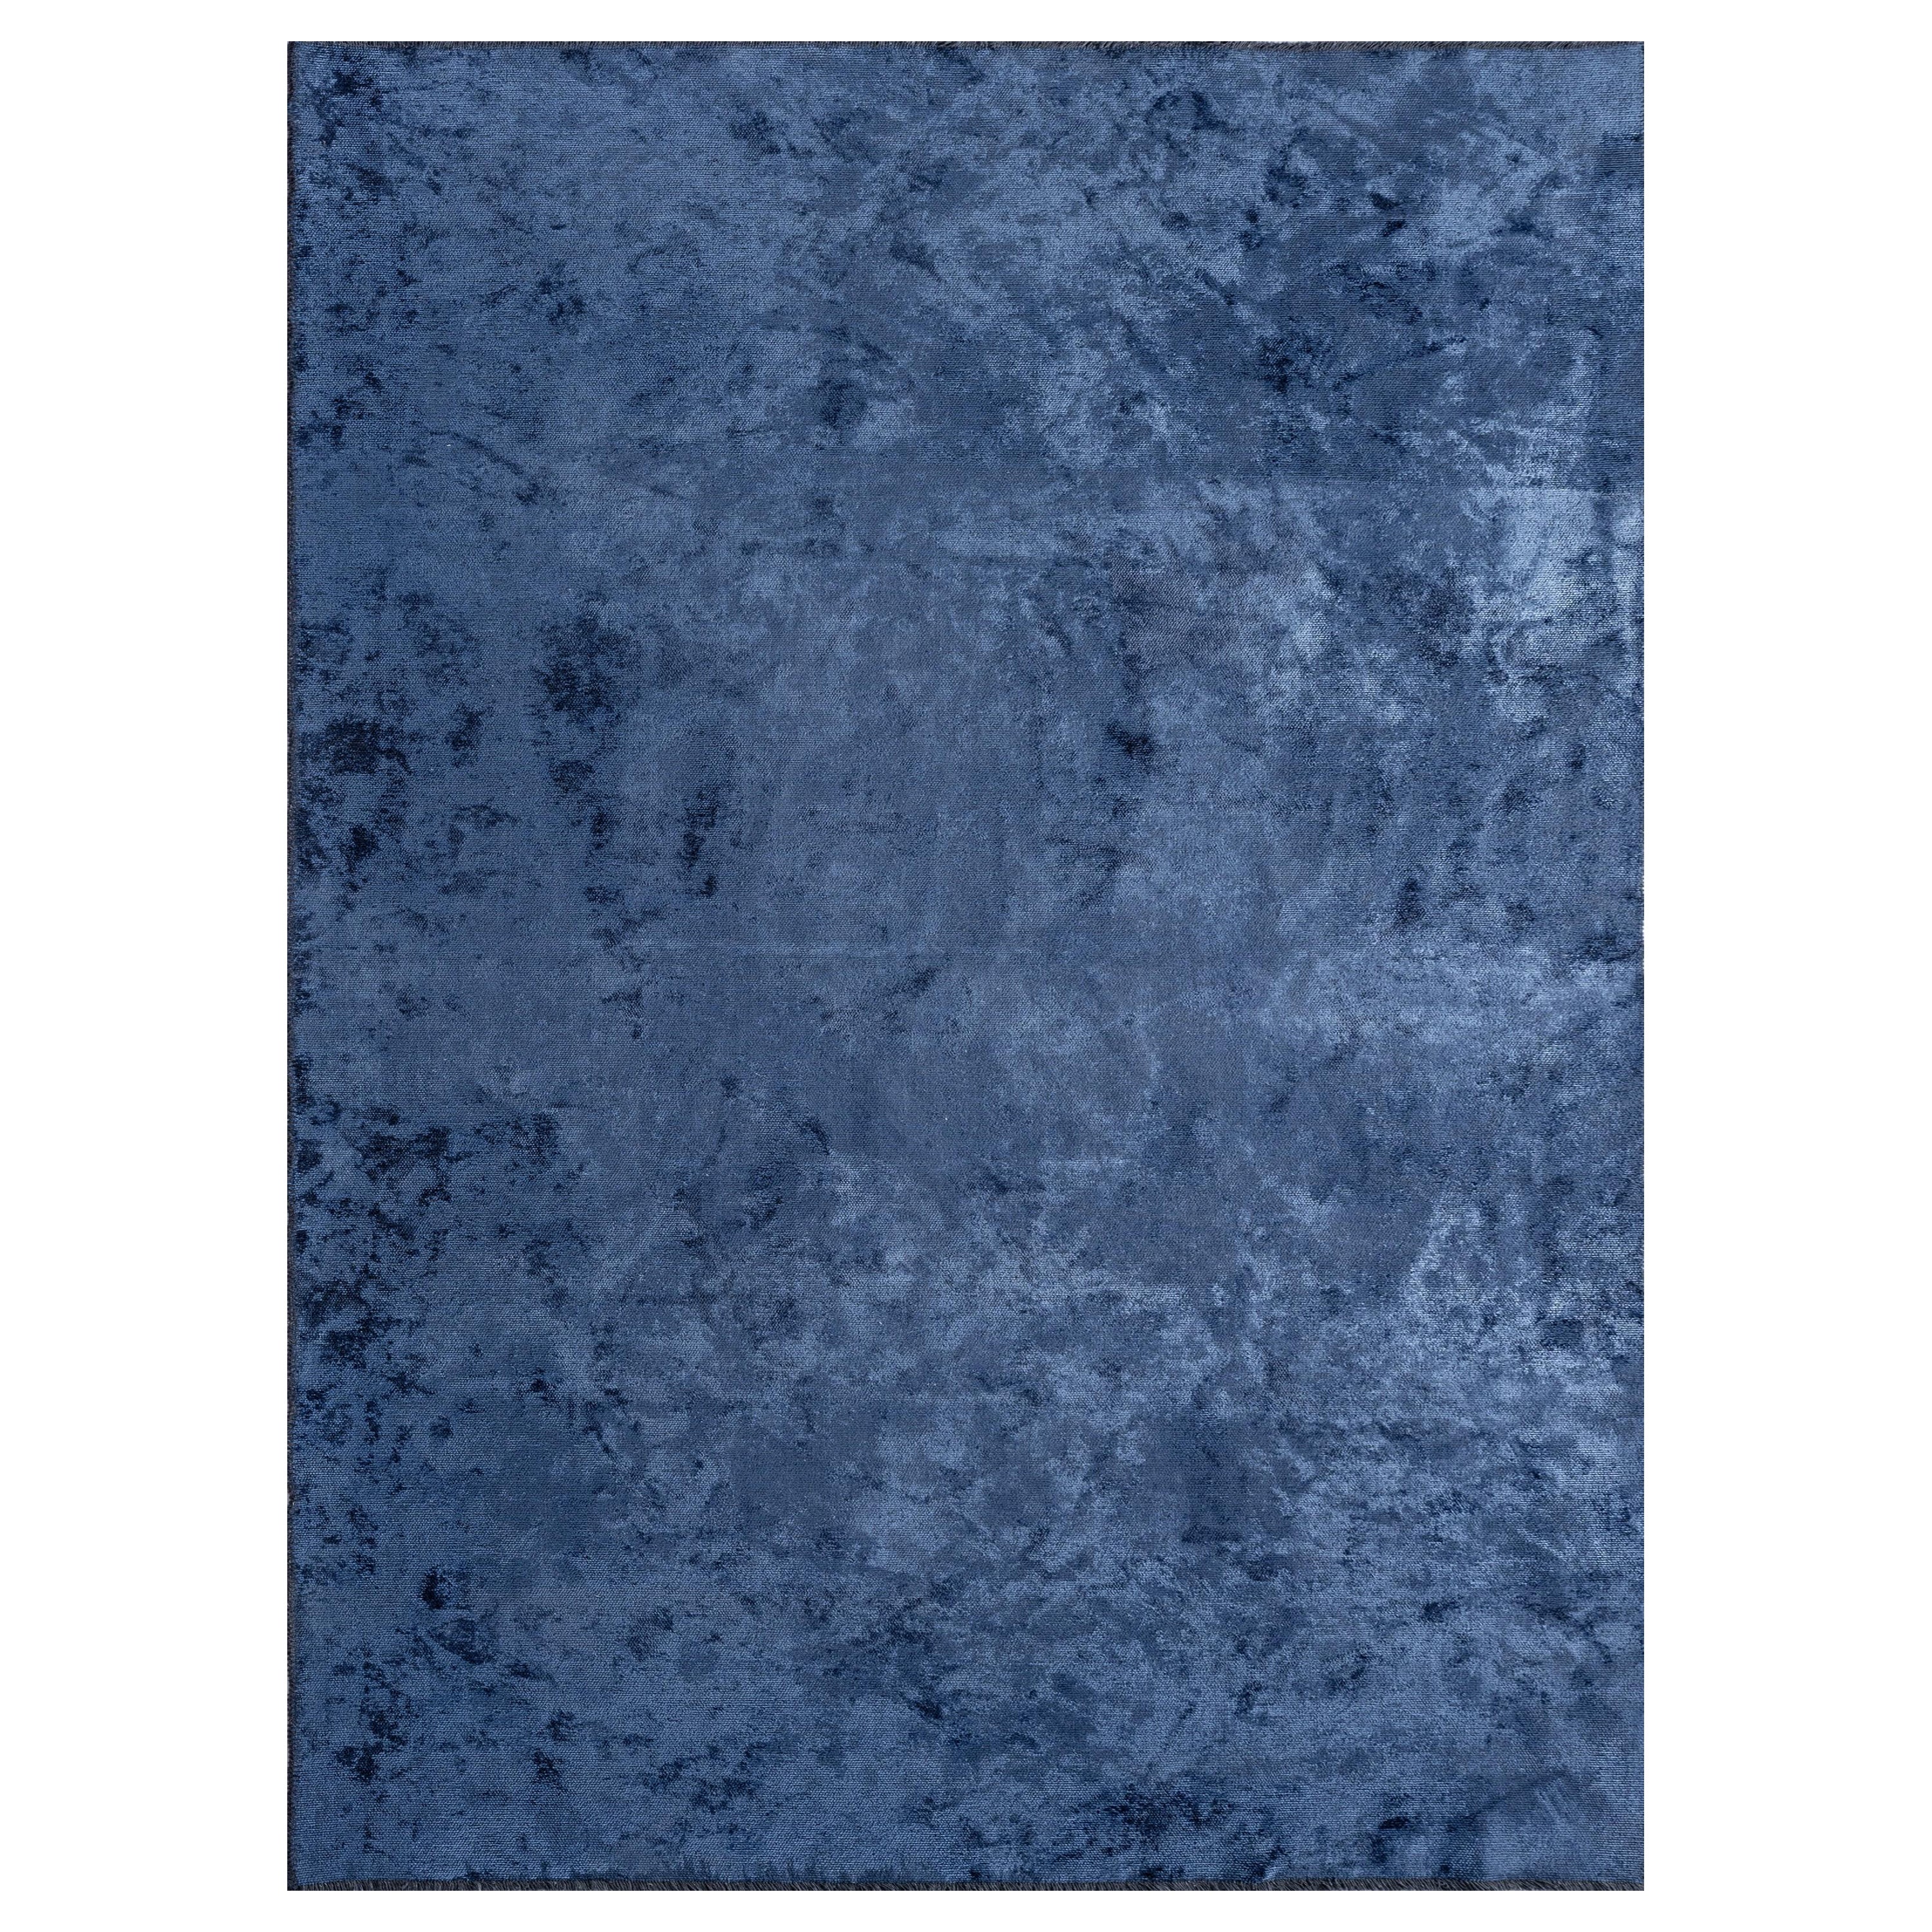 Im Angebot: Modern Solid Color Luxury Area Rug,  (Blau)